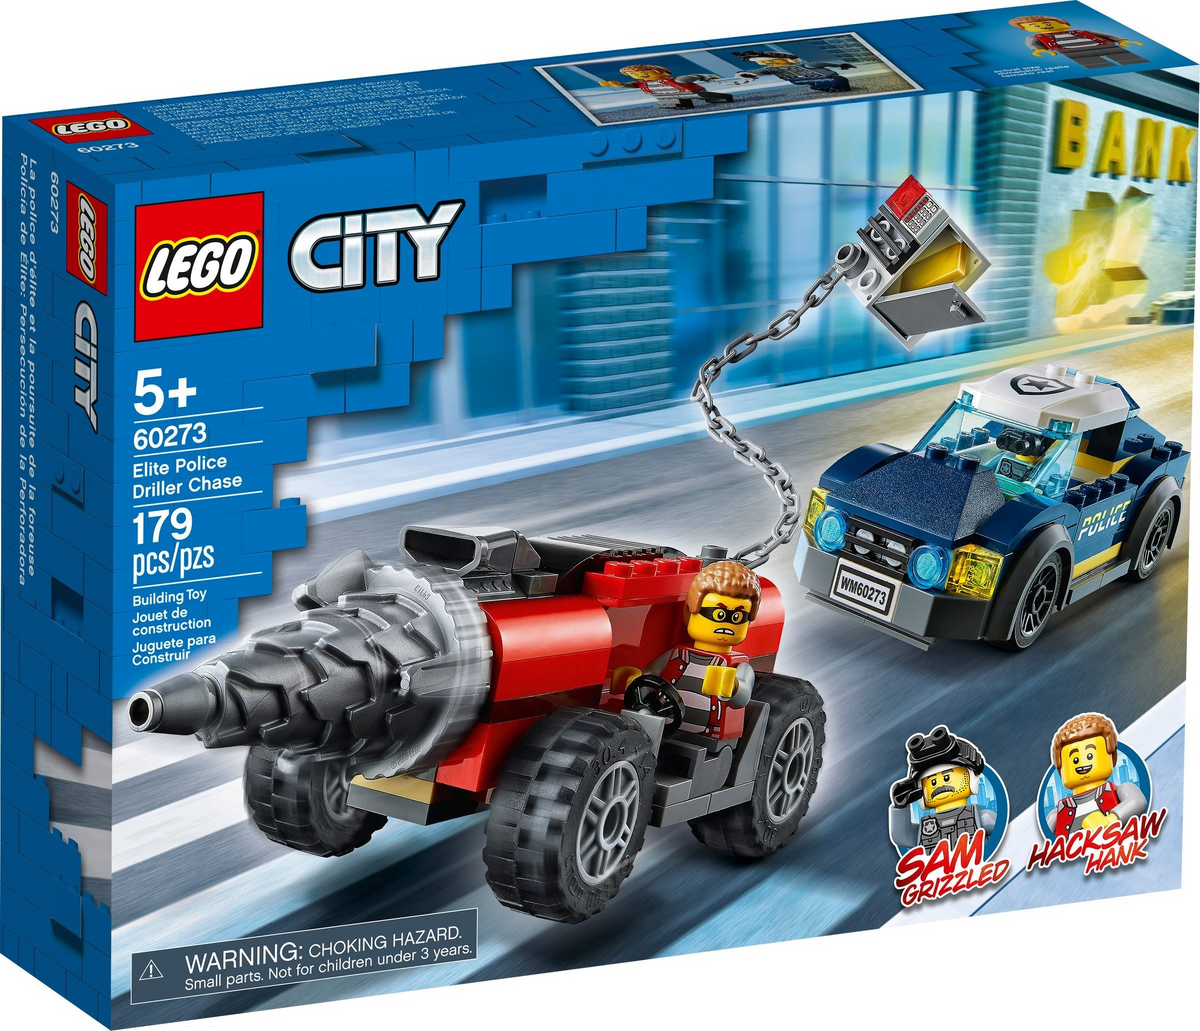 60273 Elite Police Driller Chase | Lego City Adventures Wiki | Fandom